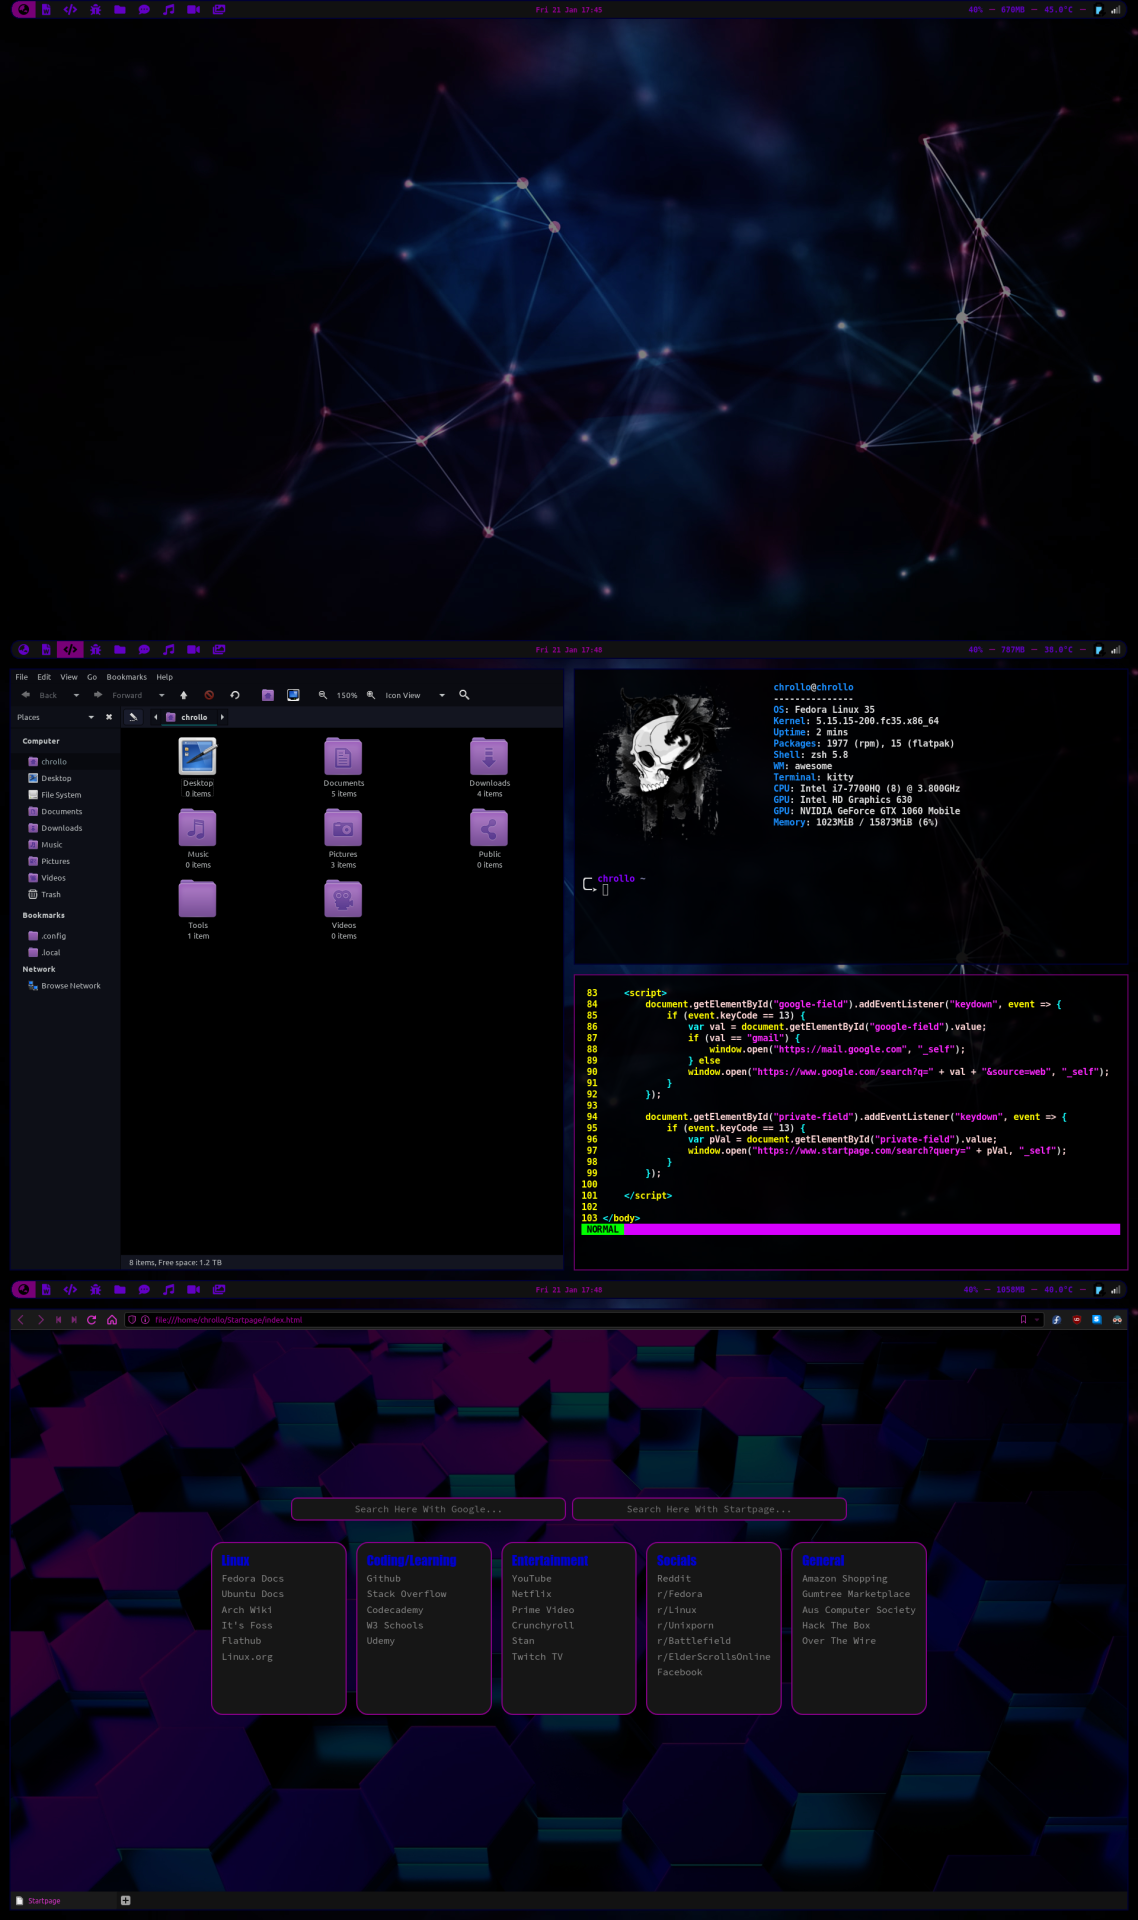 [AwesomeWM] Darkness #linux#linuxmasterrace#linuxmemes#unix#gnu#freesoftware#tux#arch linux#ubuntu#linux mint#pr